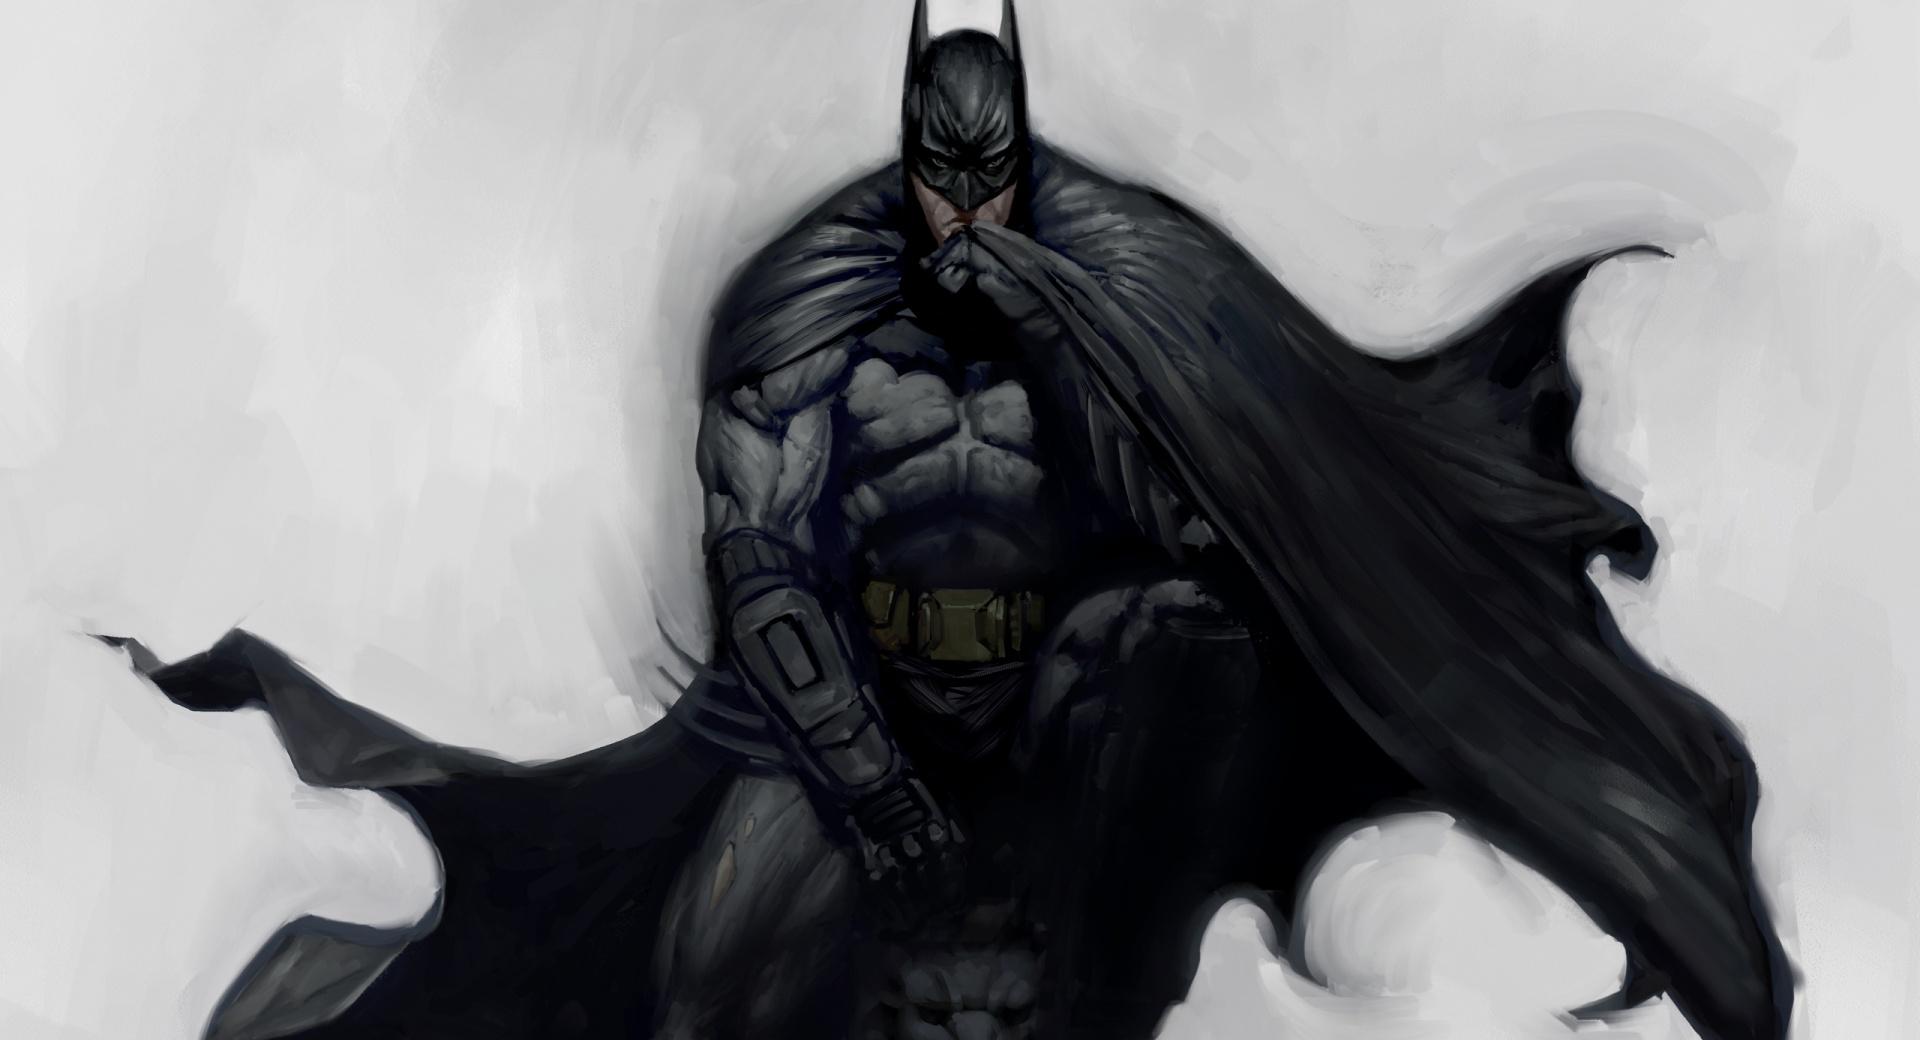 Batman Arkham City Artwork at 1280 x 960 size wallpapers HD quality